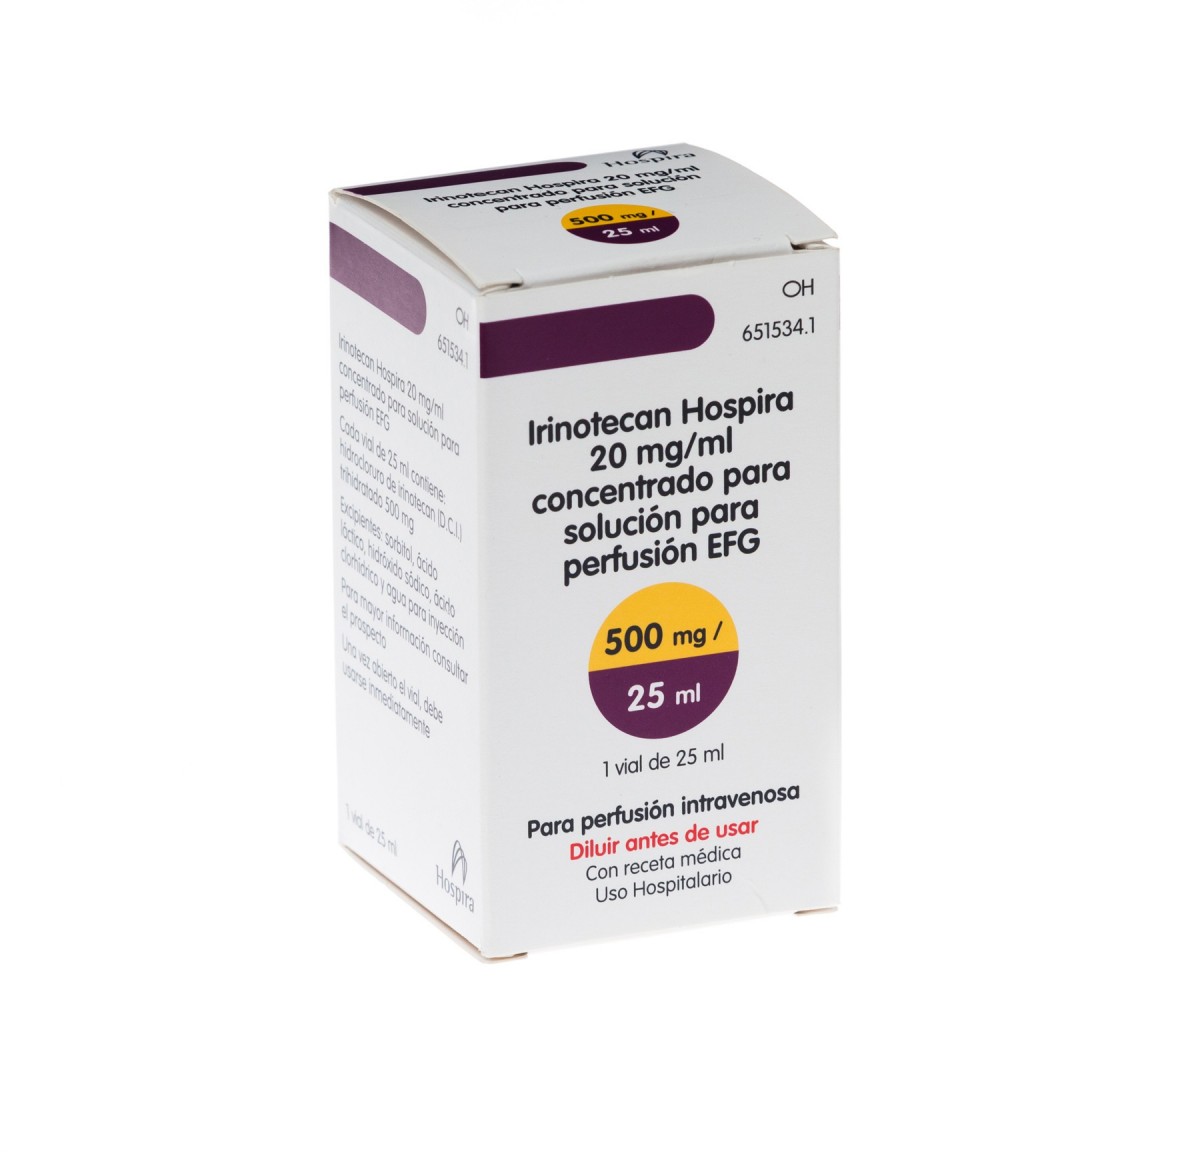 IRINOTECAN HOSPIRA 20 mg/ml CONCENTRADO PARA SOLUCION PARA  PERFUSION EFG , 1 vial de 2 ml fotografía del envase.